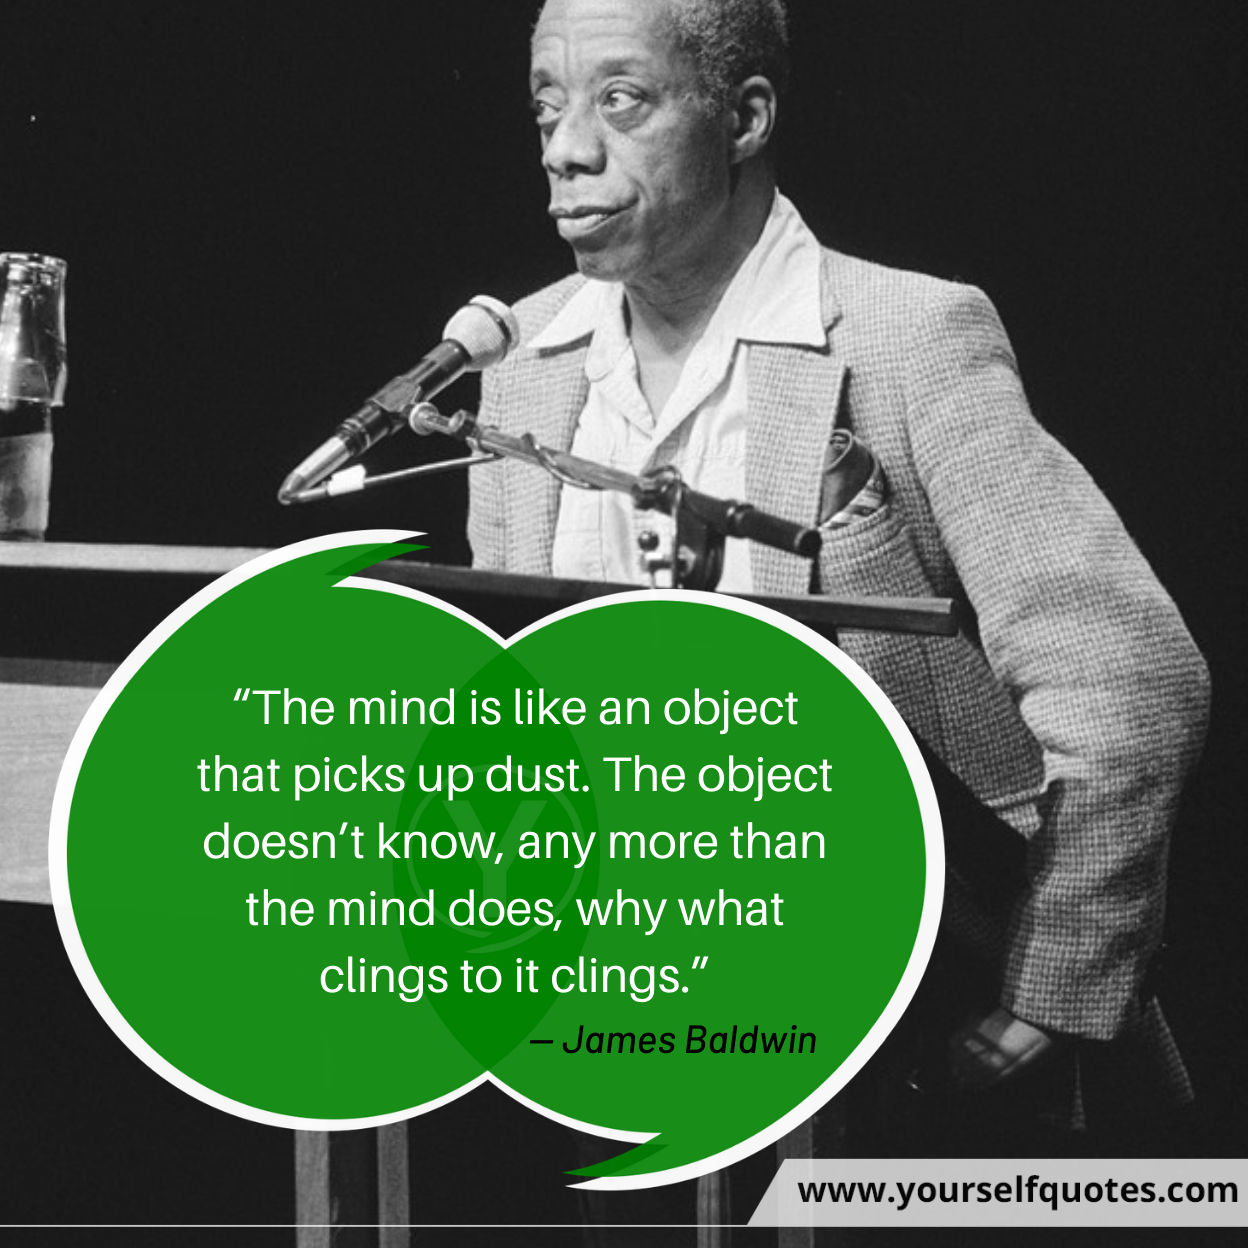 Best James Baldwin Quotes images